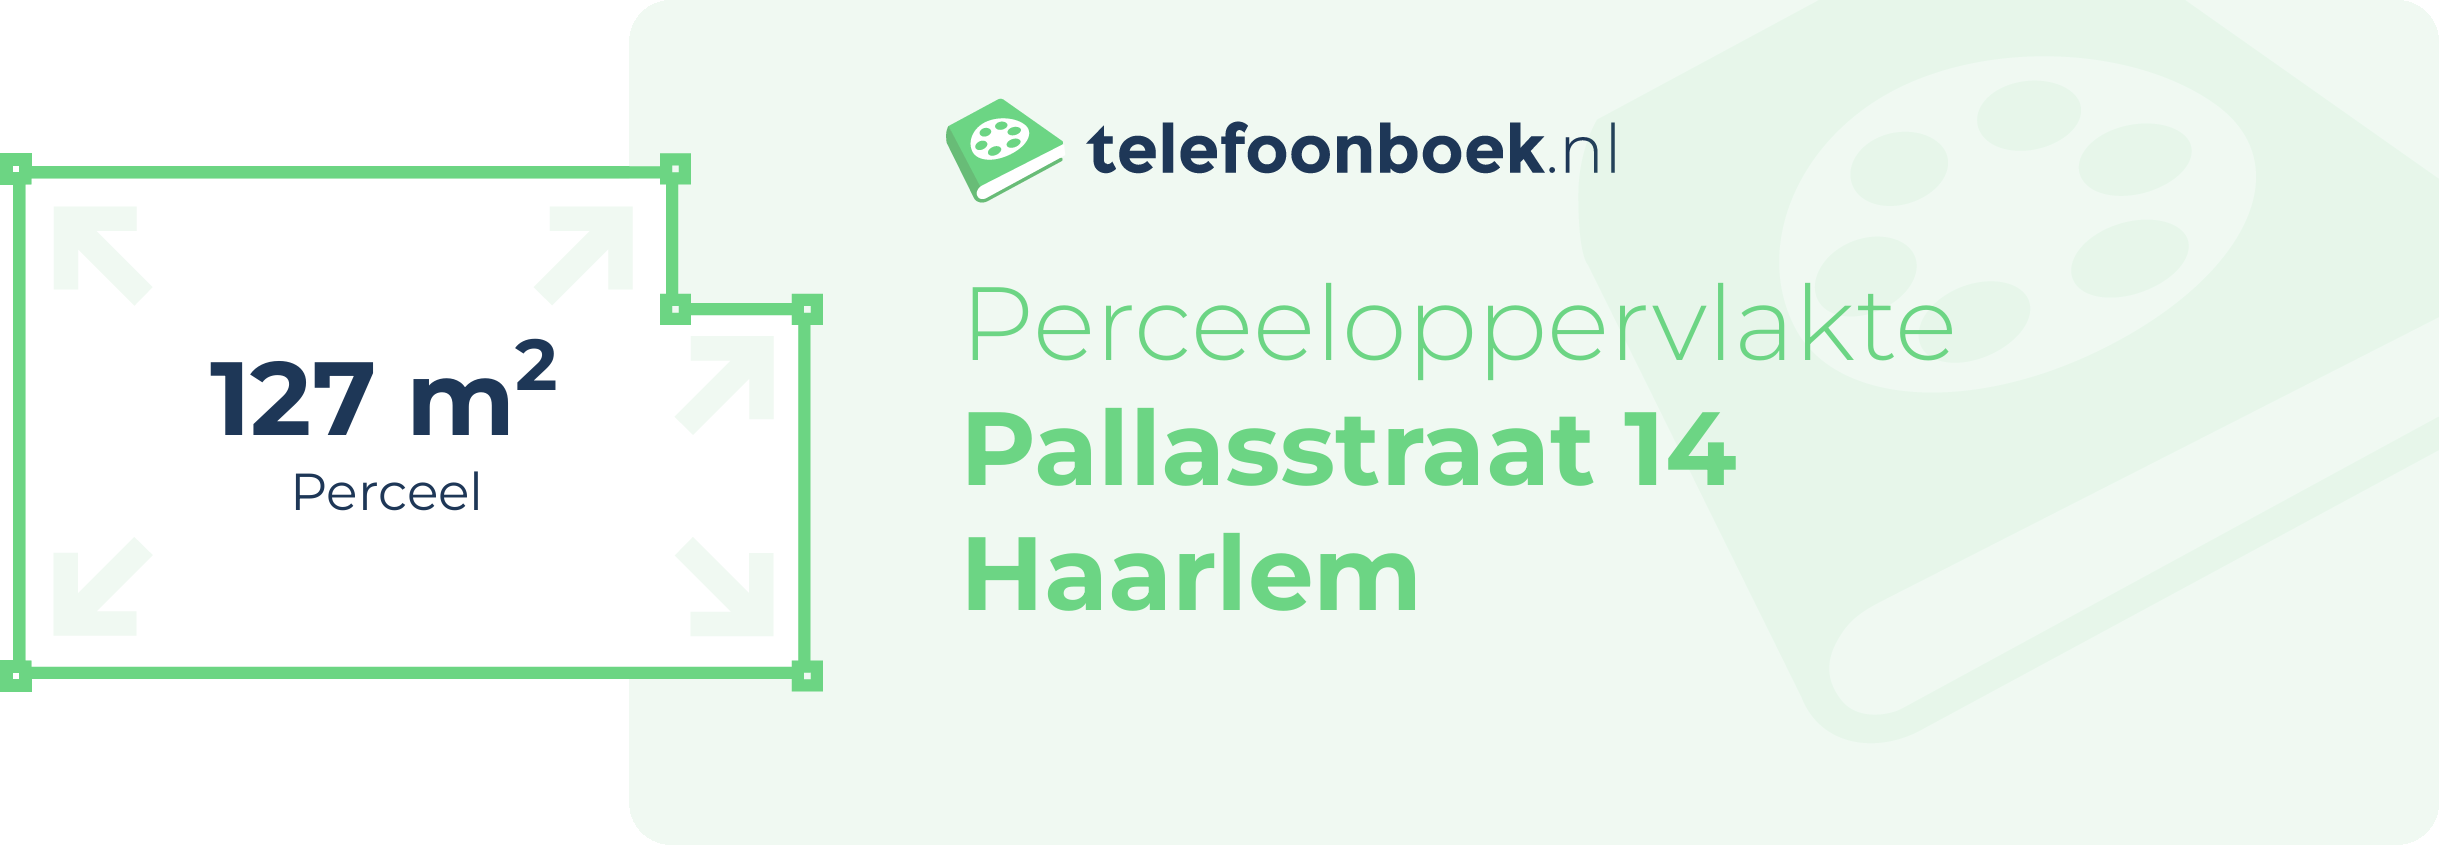 Perceeloppervlakte Pallasstraat 14 Haarlem